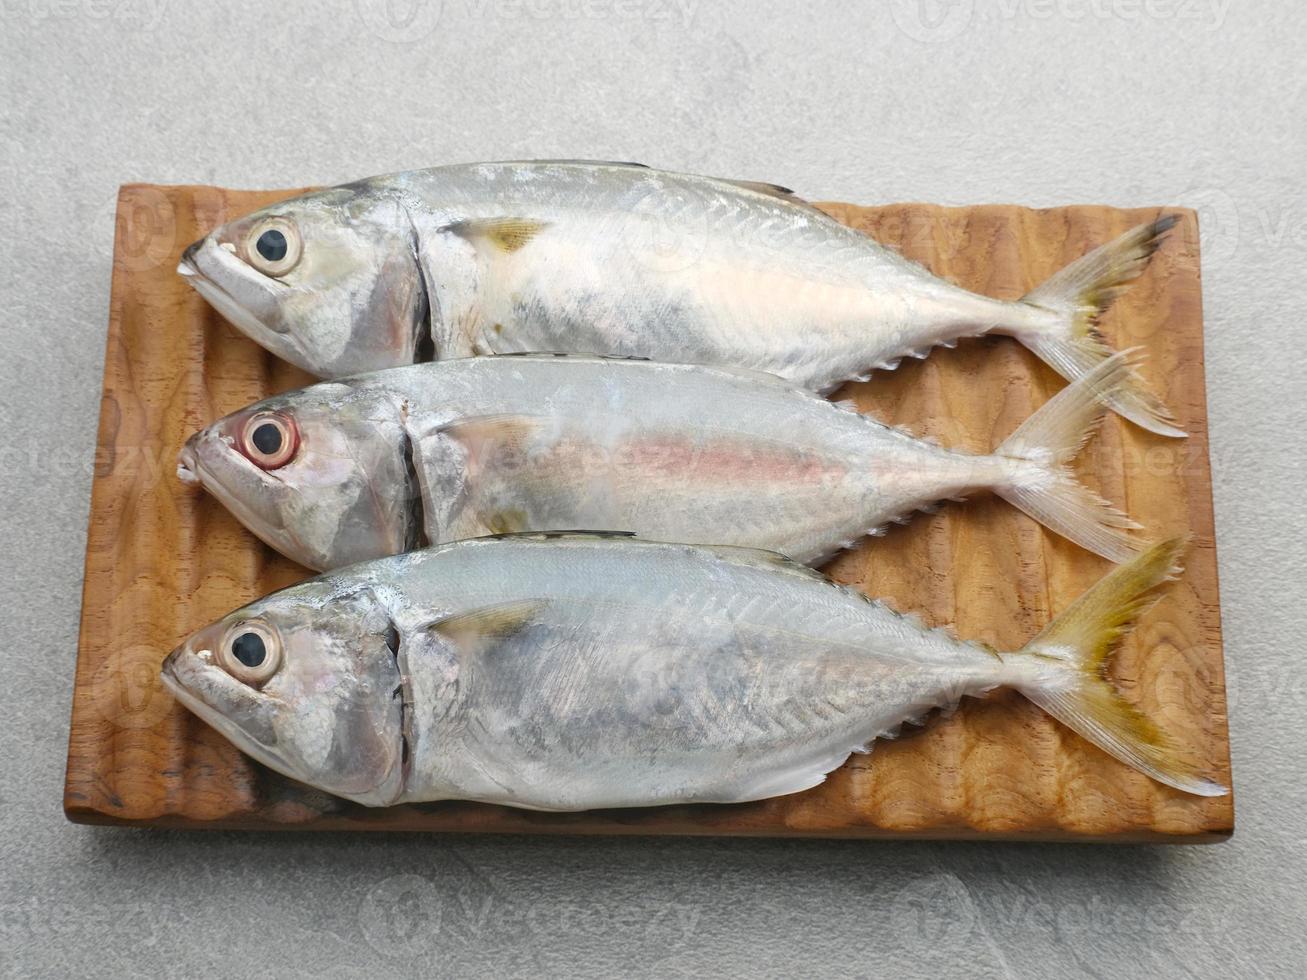 Ikan Kembung, Kembung Fish or Mackerel Fish on wooden chopping board. photo